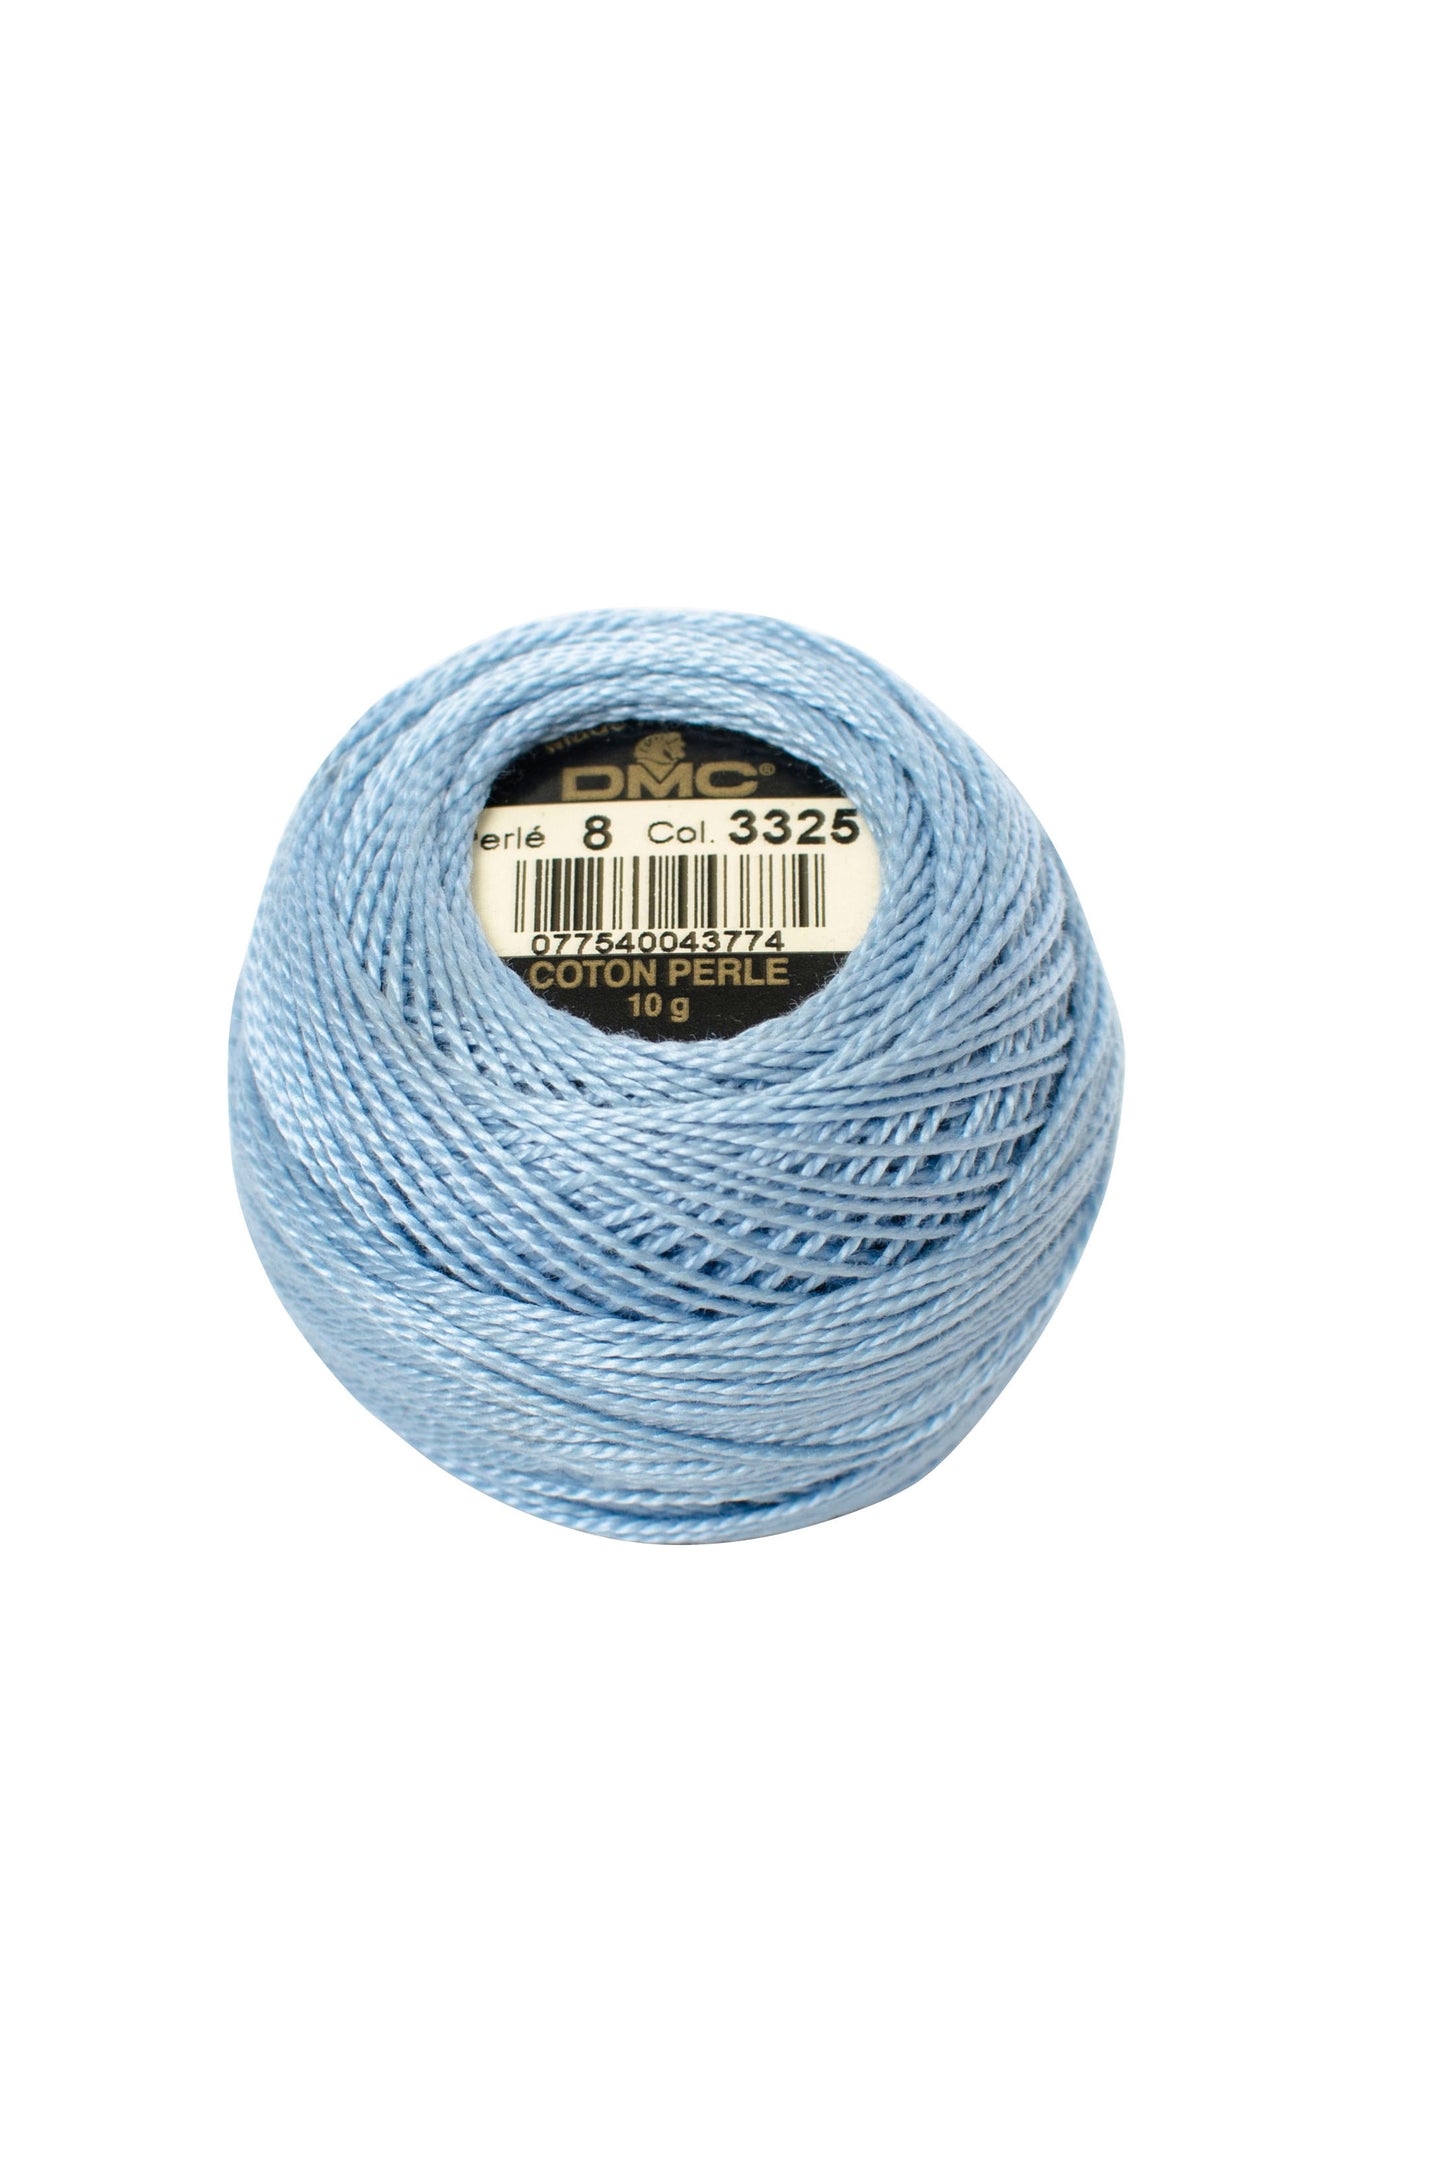 3325 Light Baby Blue - DMC #8 Perle Cotton Ball